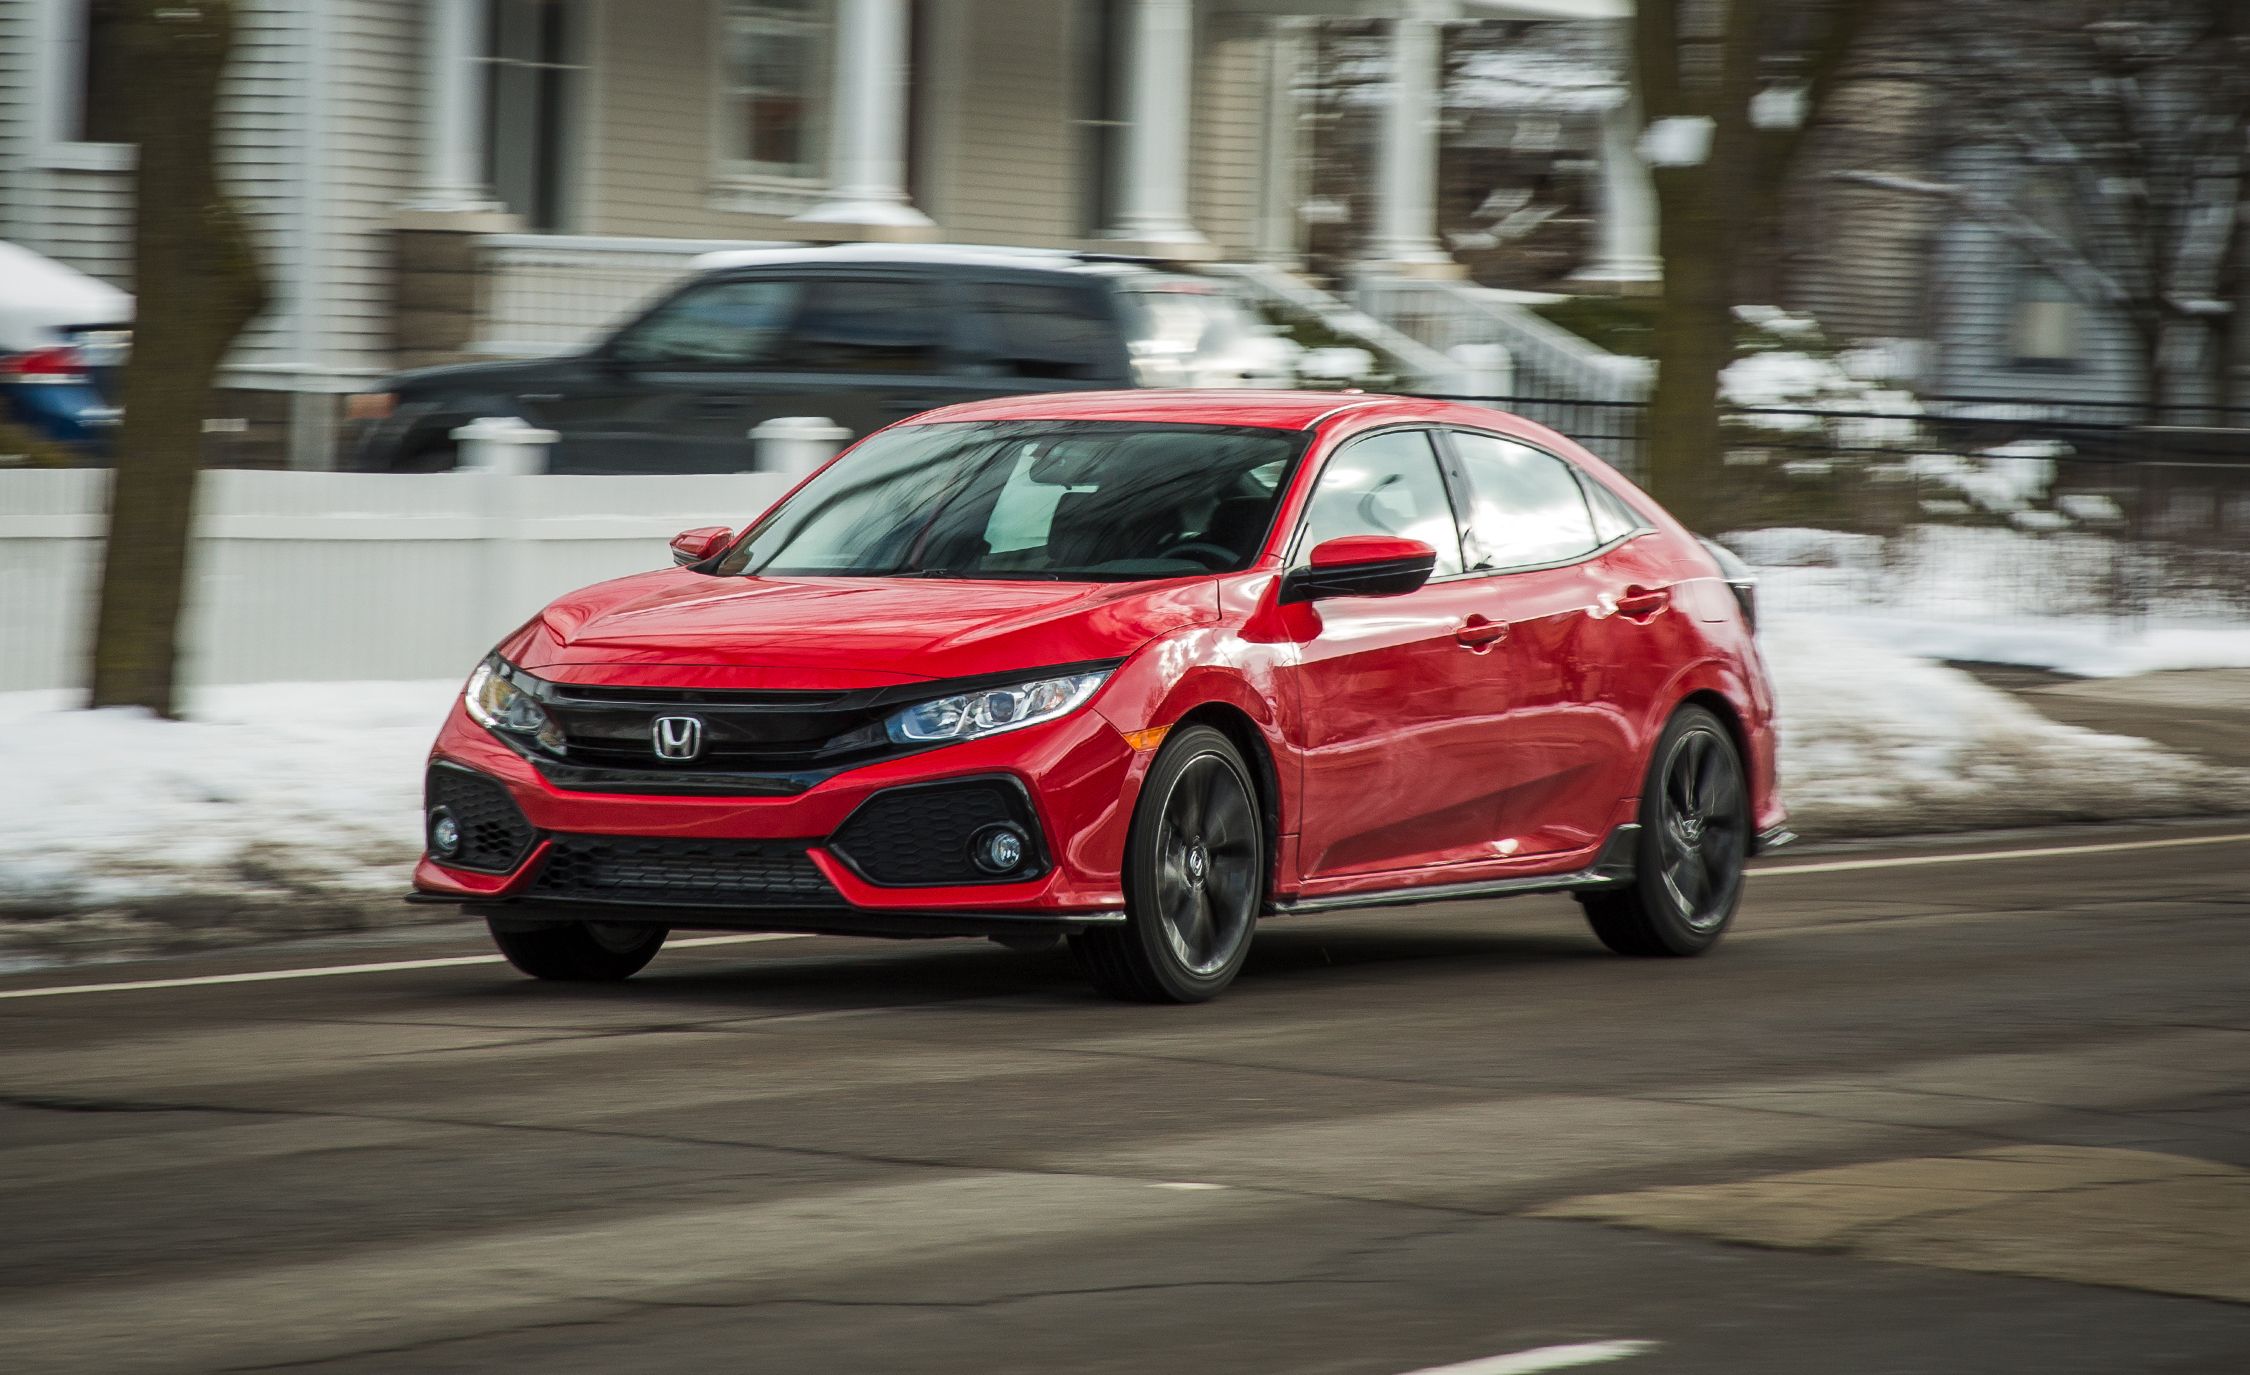 2019 Honda Civic Reviews Honda Civic Price Photos And Specs